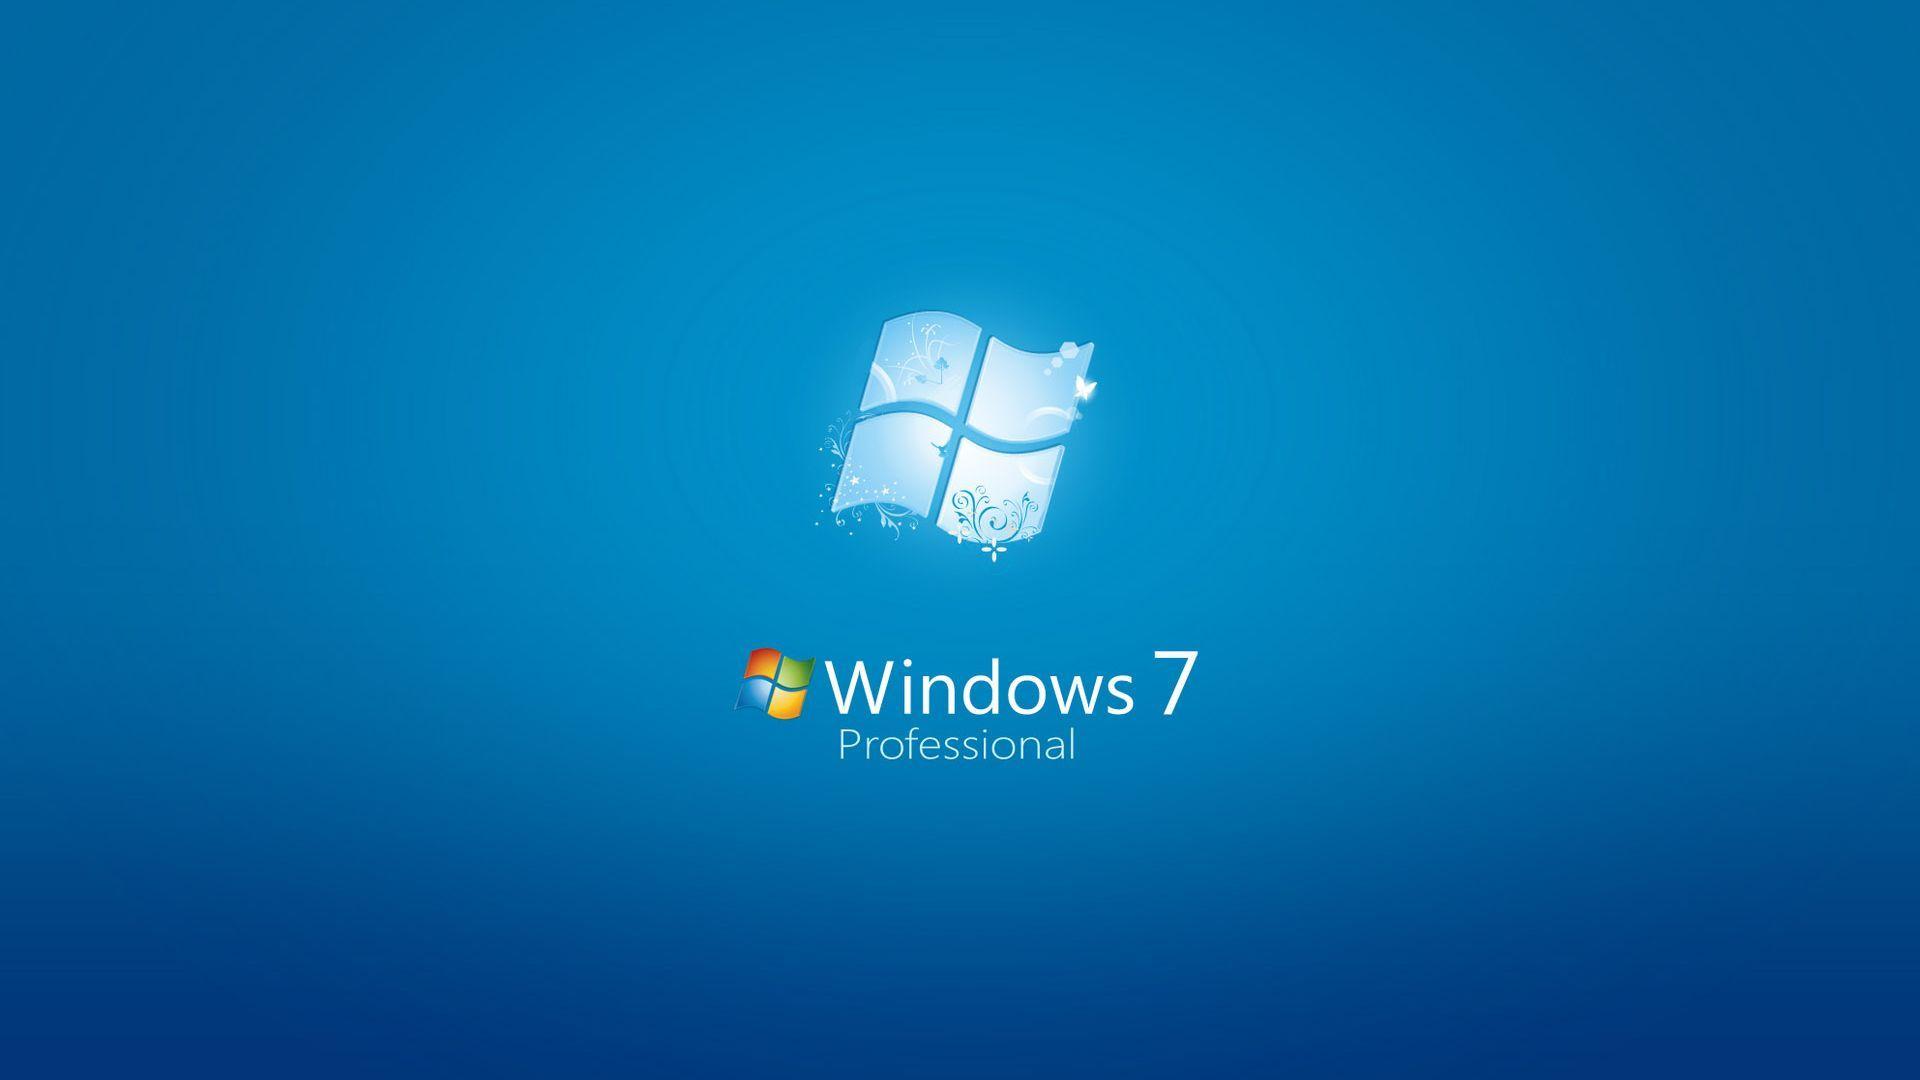 Desktop Wallpaper · Gallery · Windows 7 · Windows 7 Professional